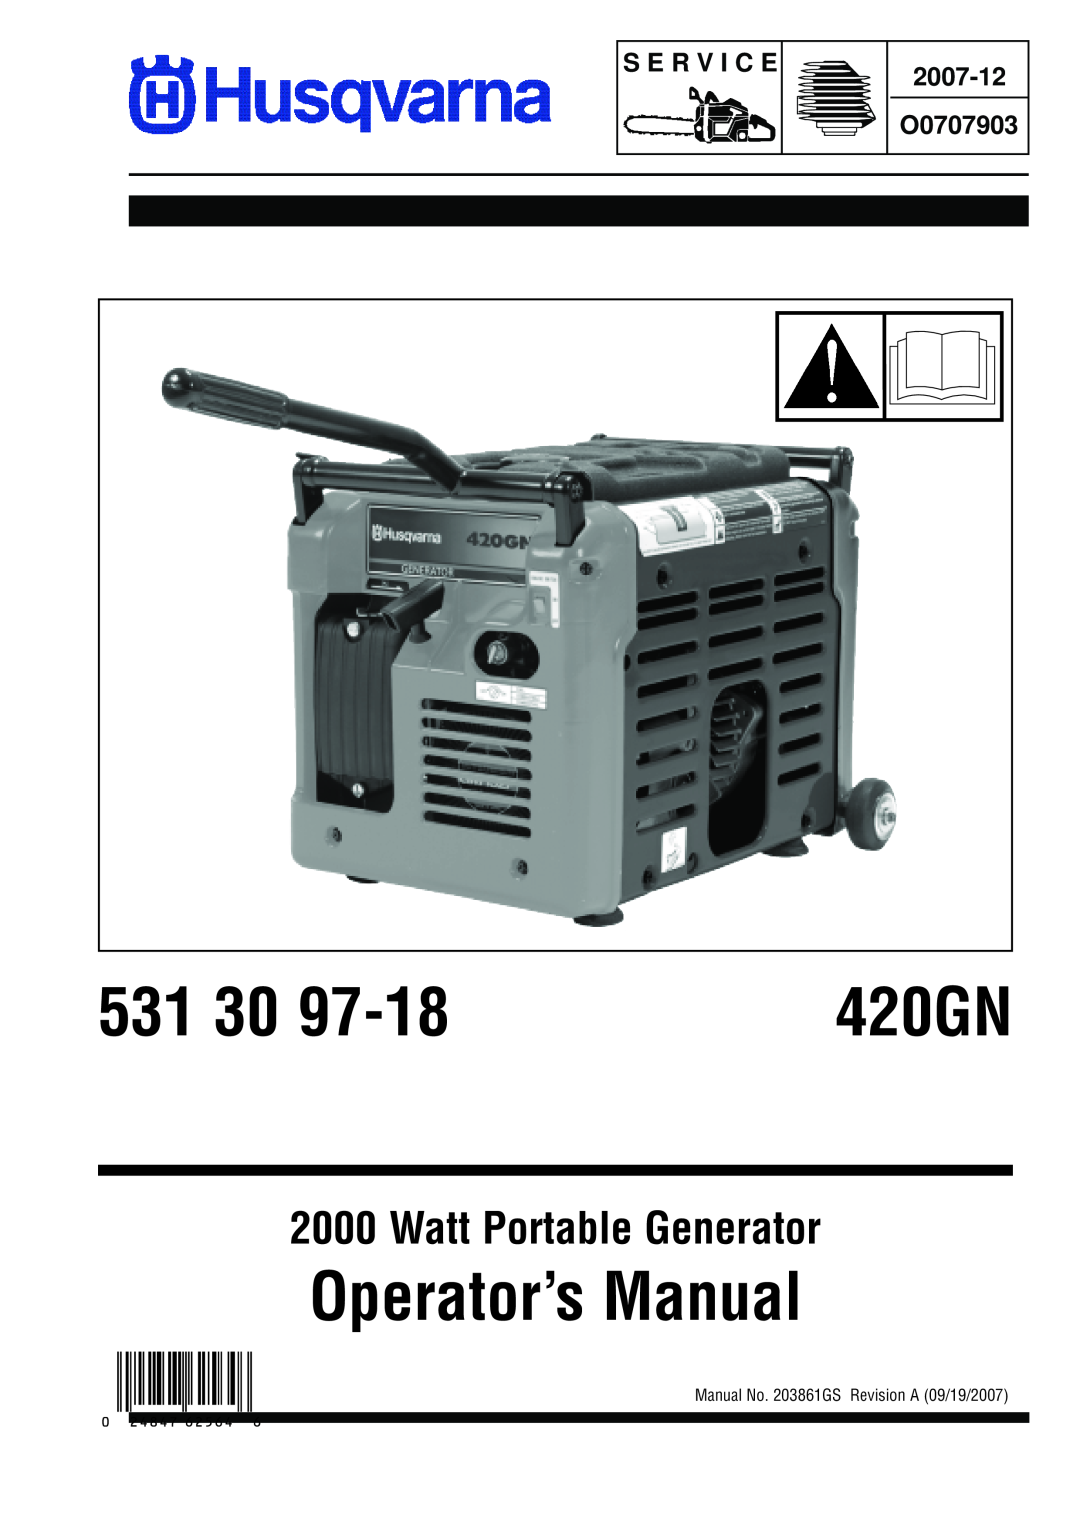 Husqvarna 420 GN manual Watt Portable Generator, 2007-12 O0707903, Operator’s Manual, 531 30, 420GN, S E R V I C E 